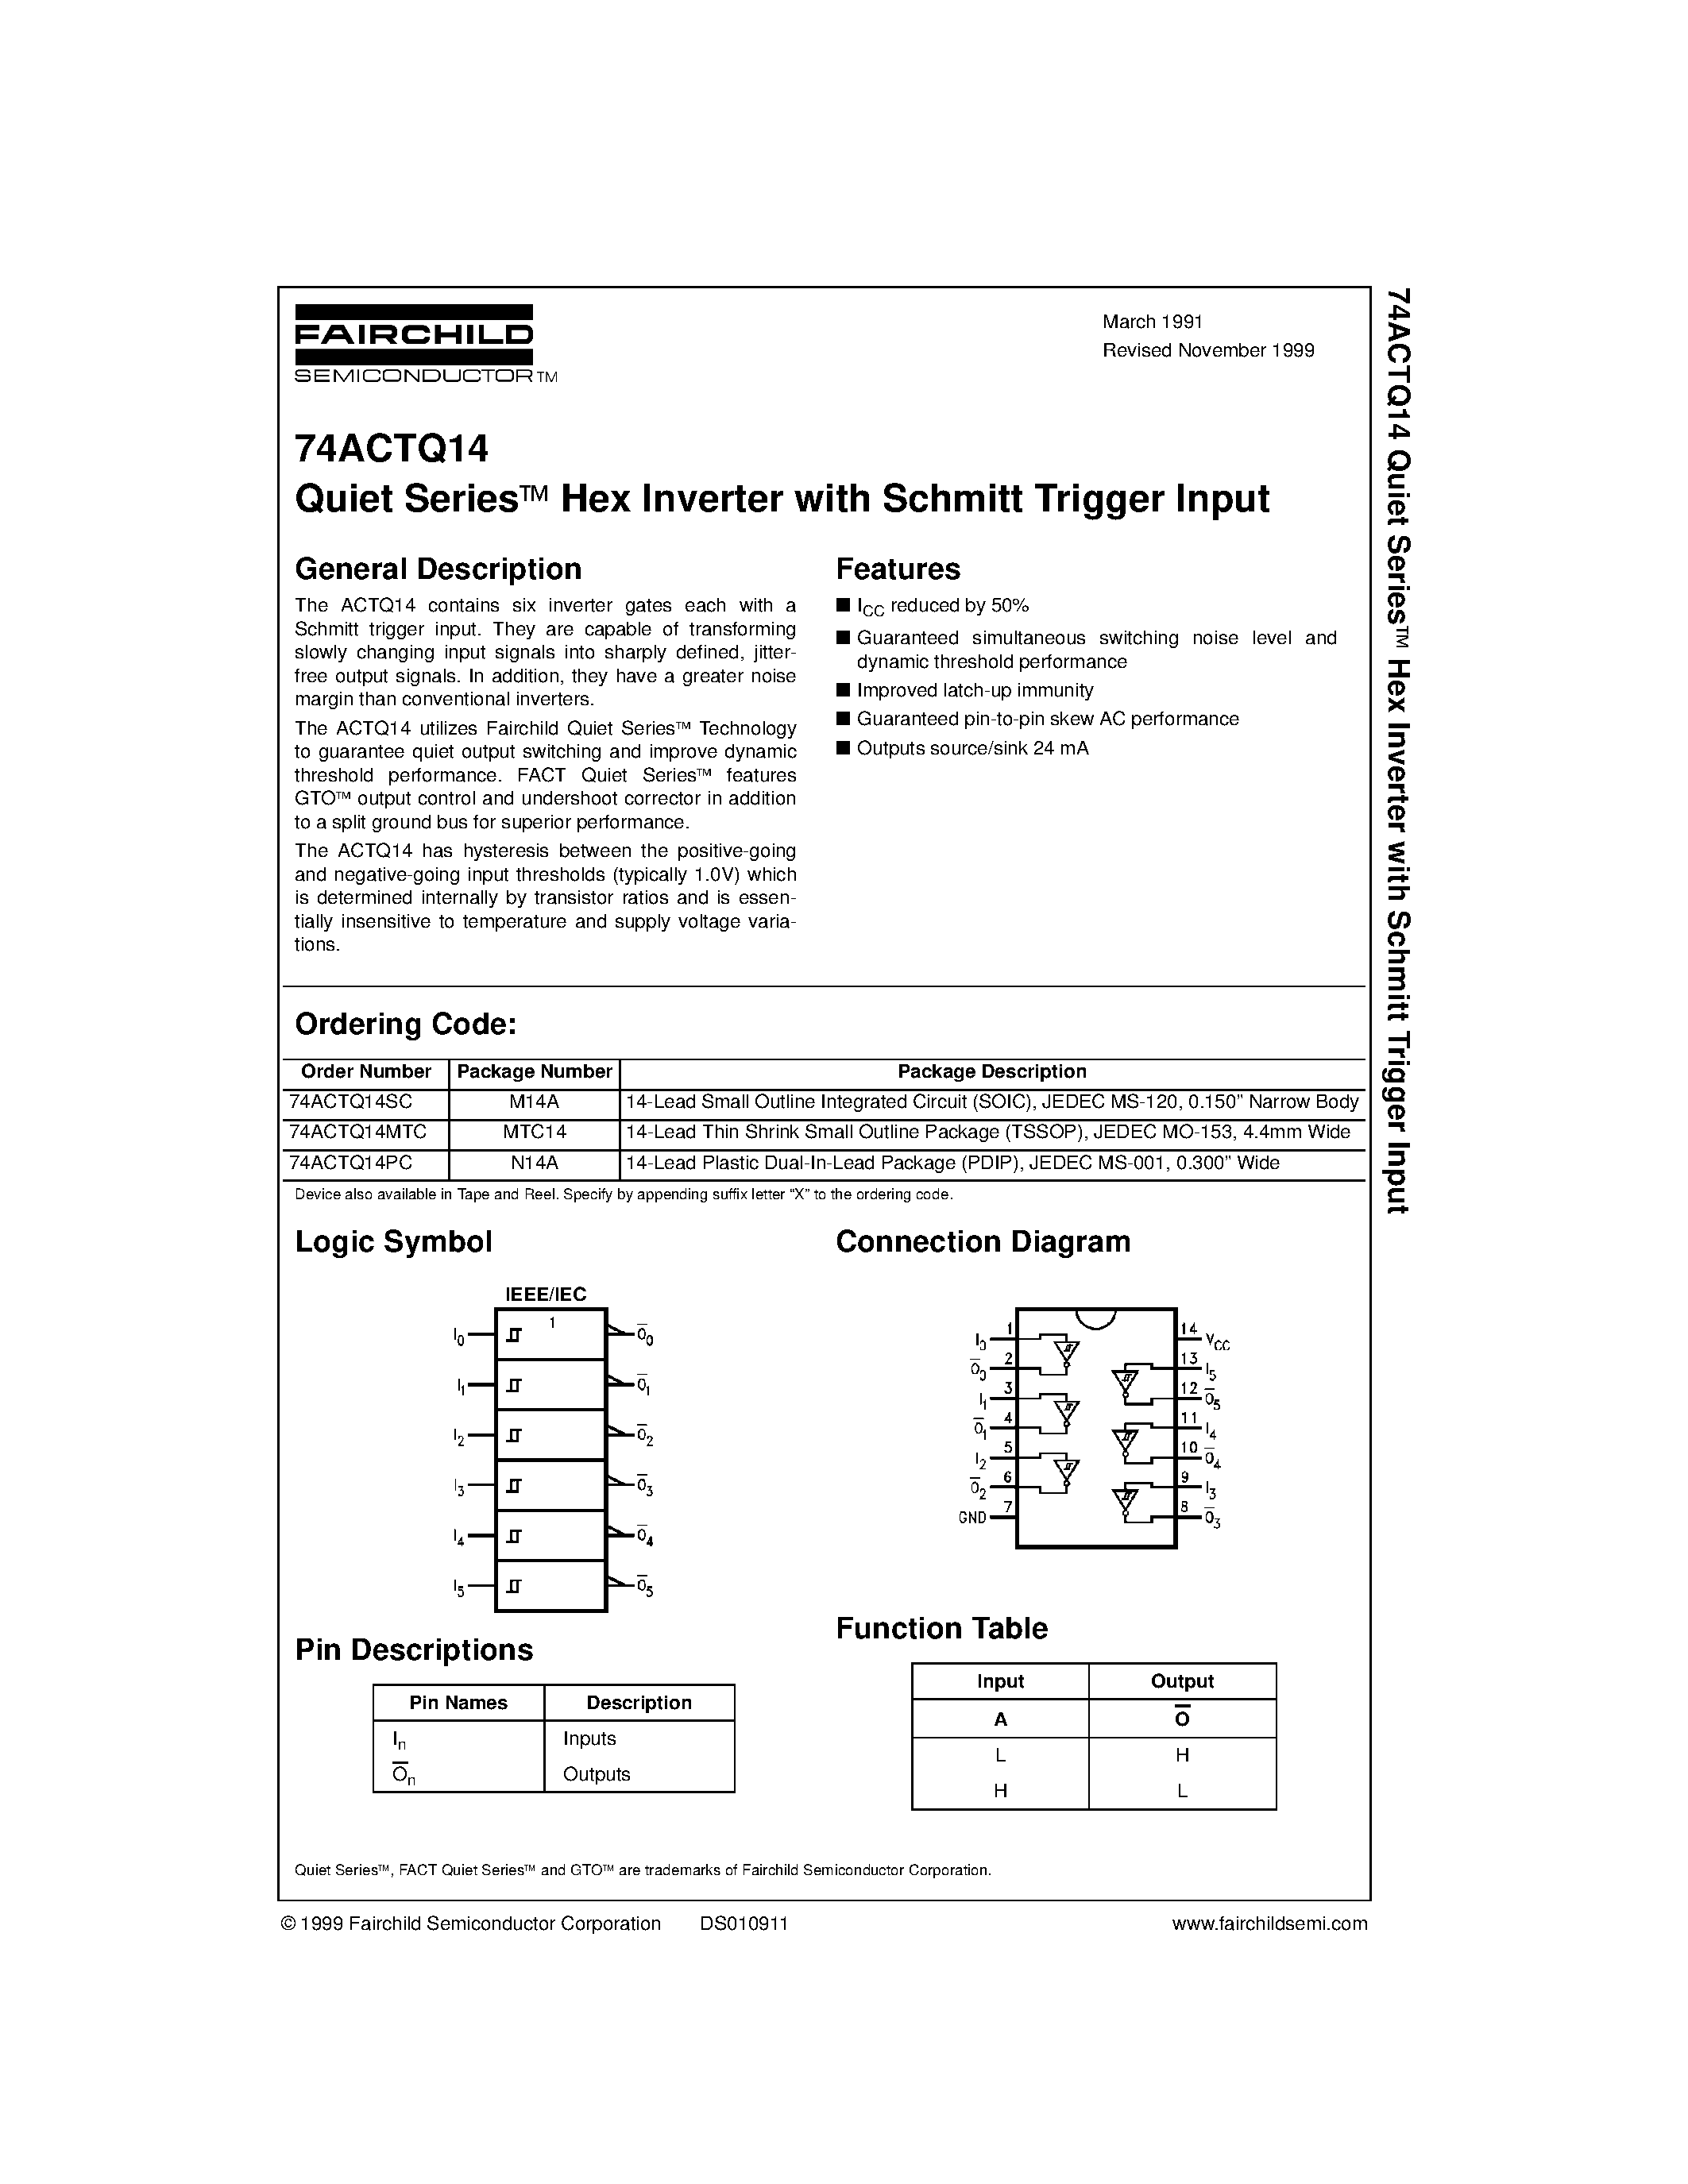 Даташит 74ACTQ14MTC - Quiet Series Hex Inverter with Schmitt Trigger Input страница 1